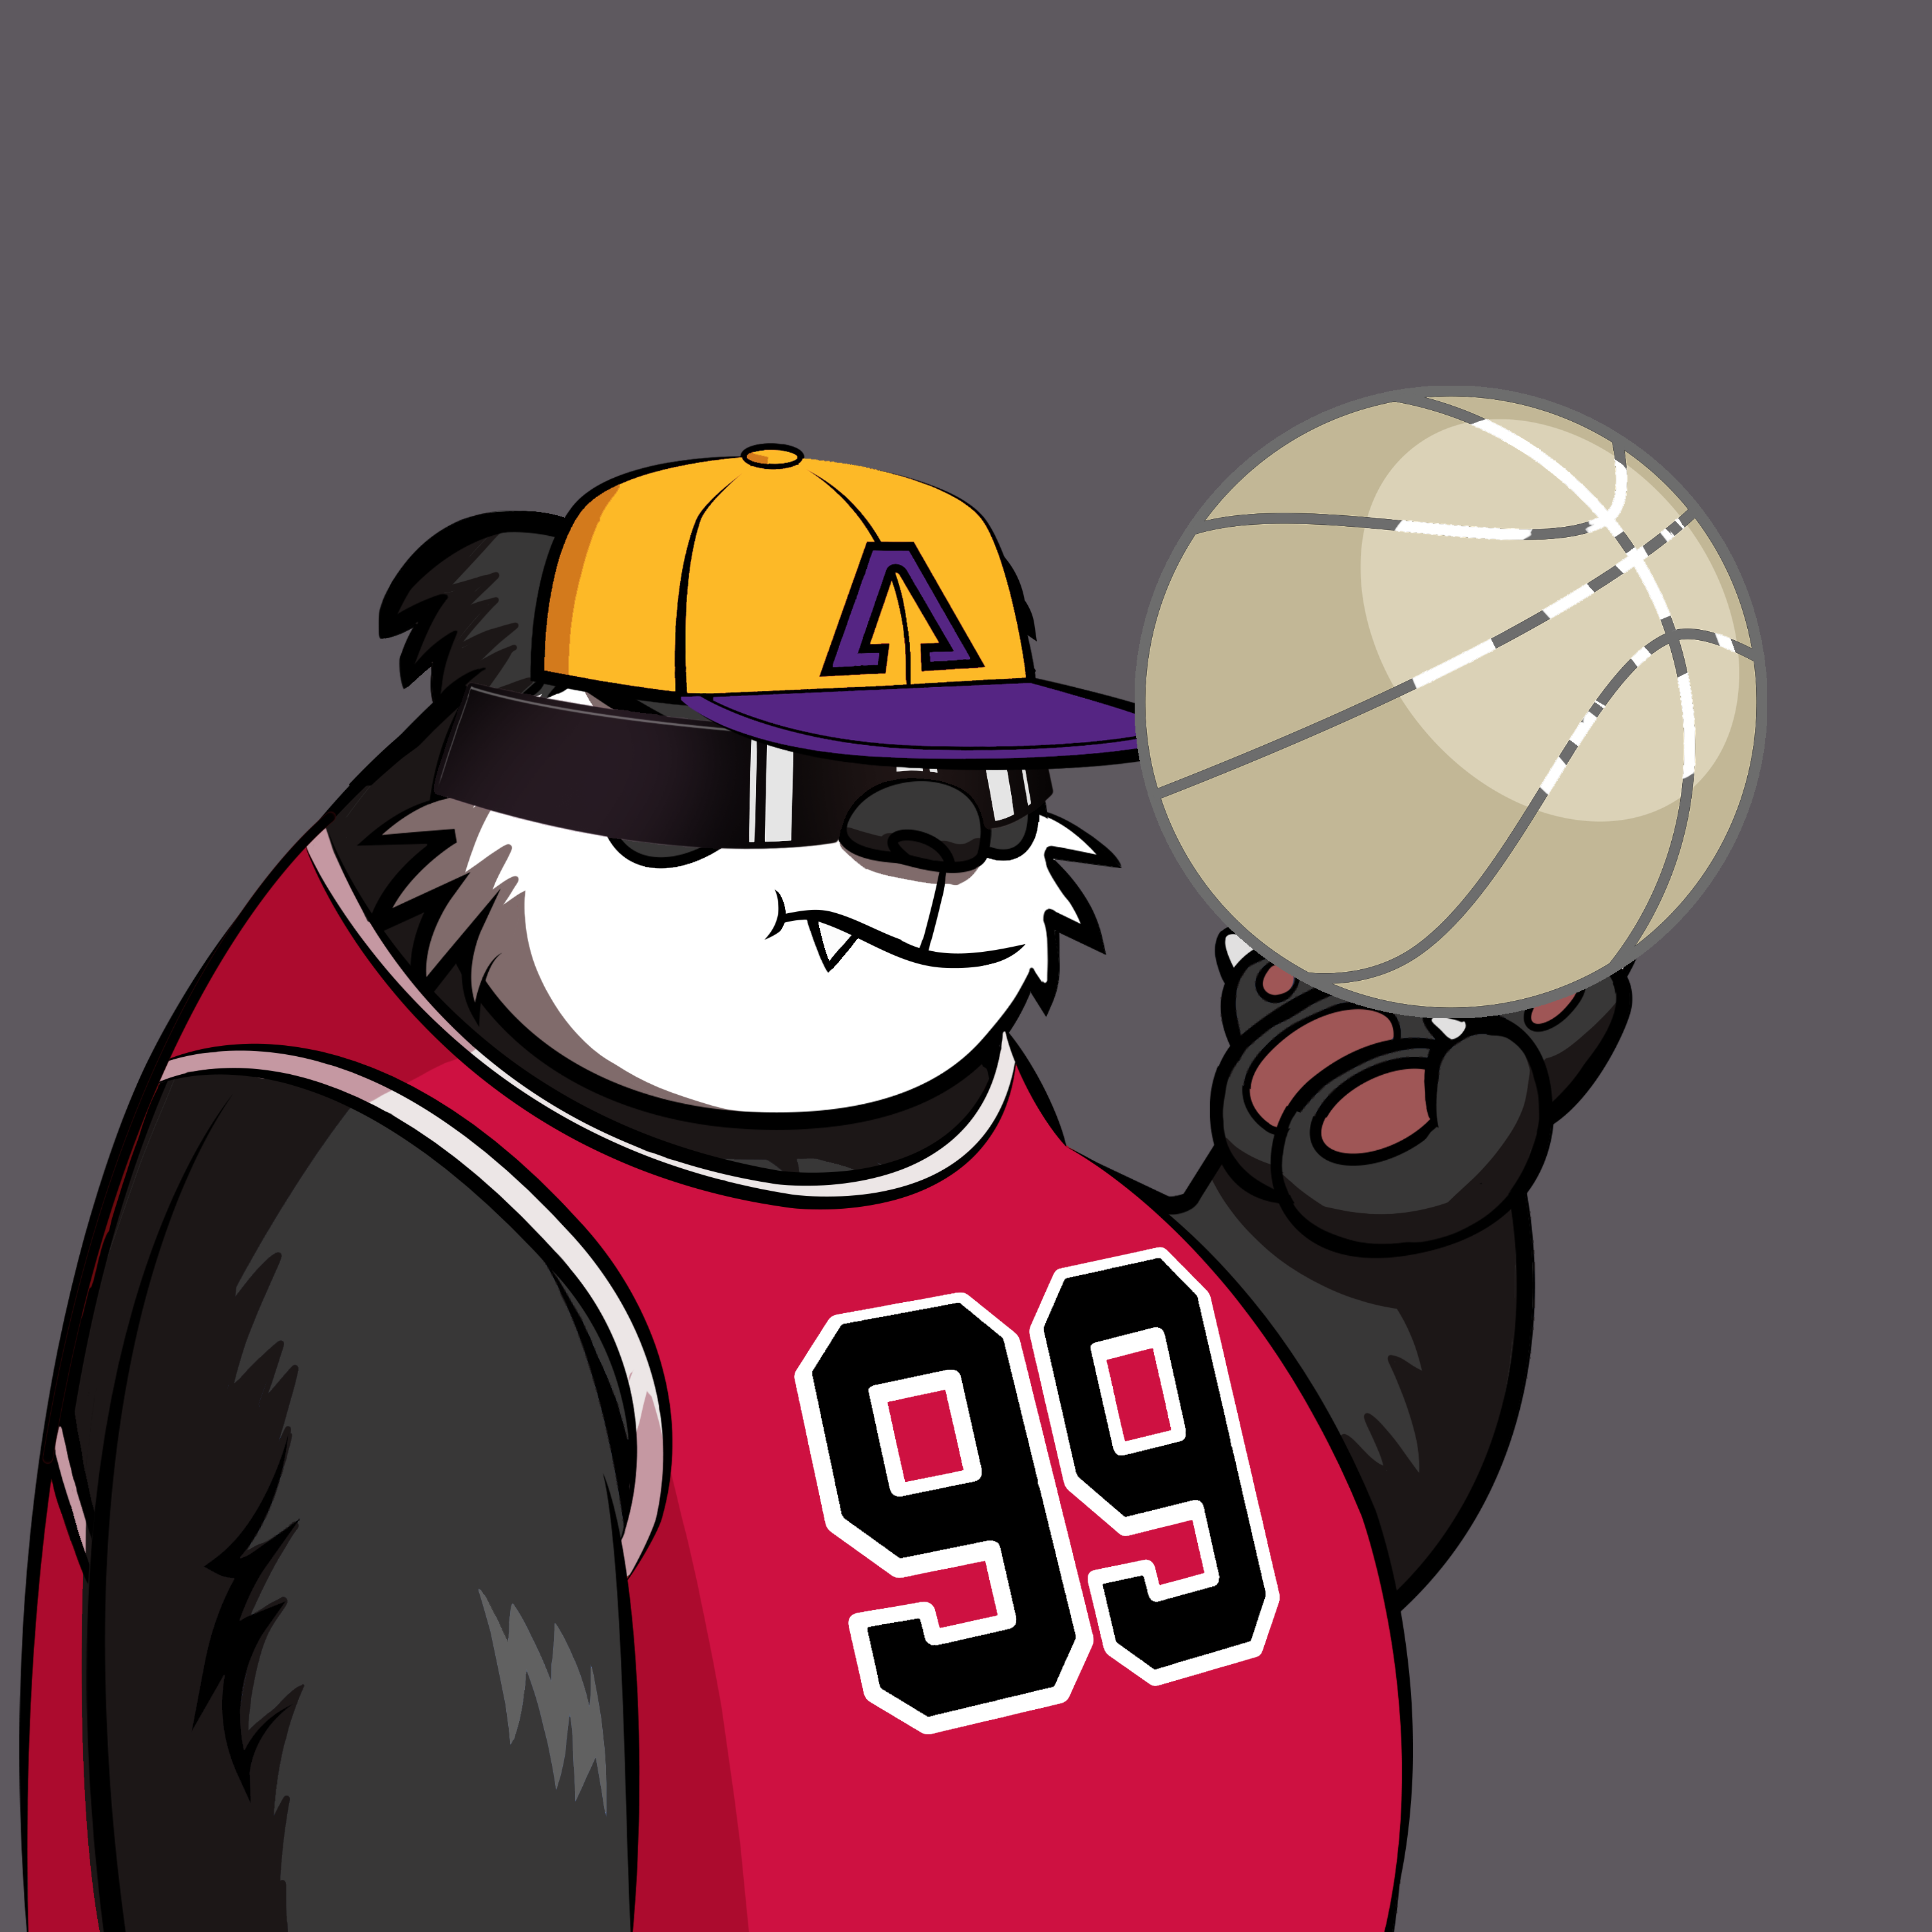 Meta Panda Club NFT